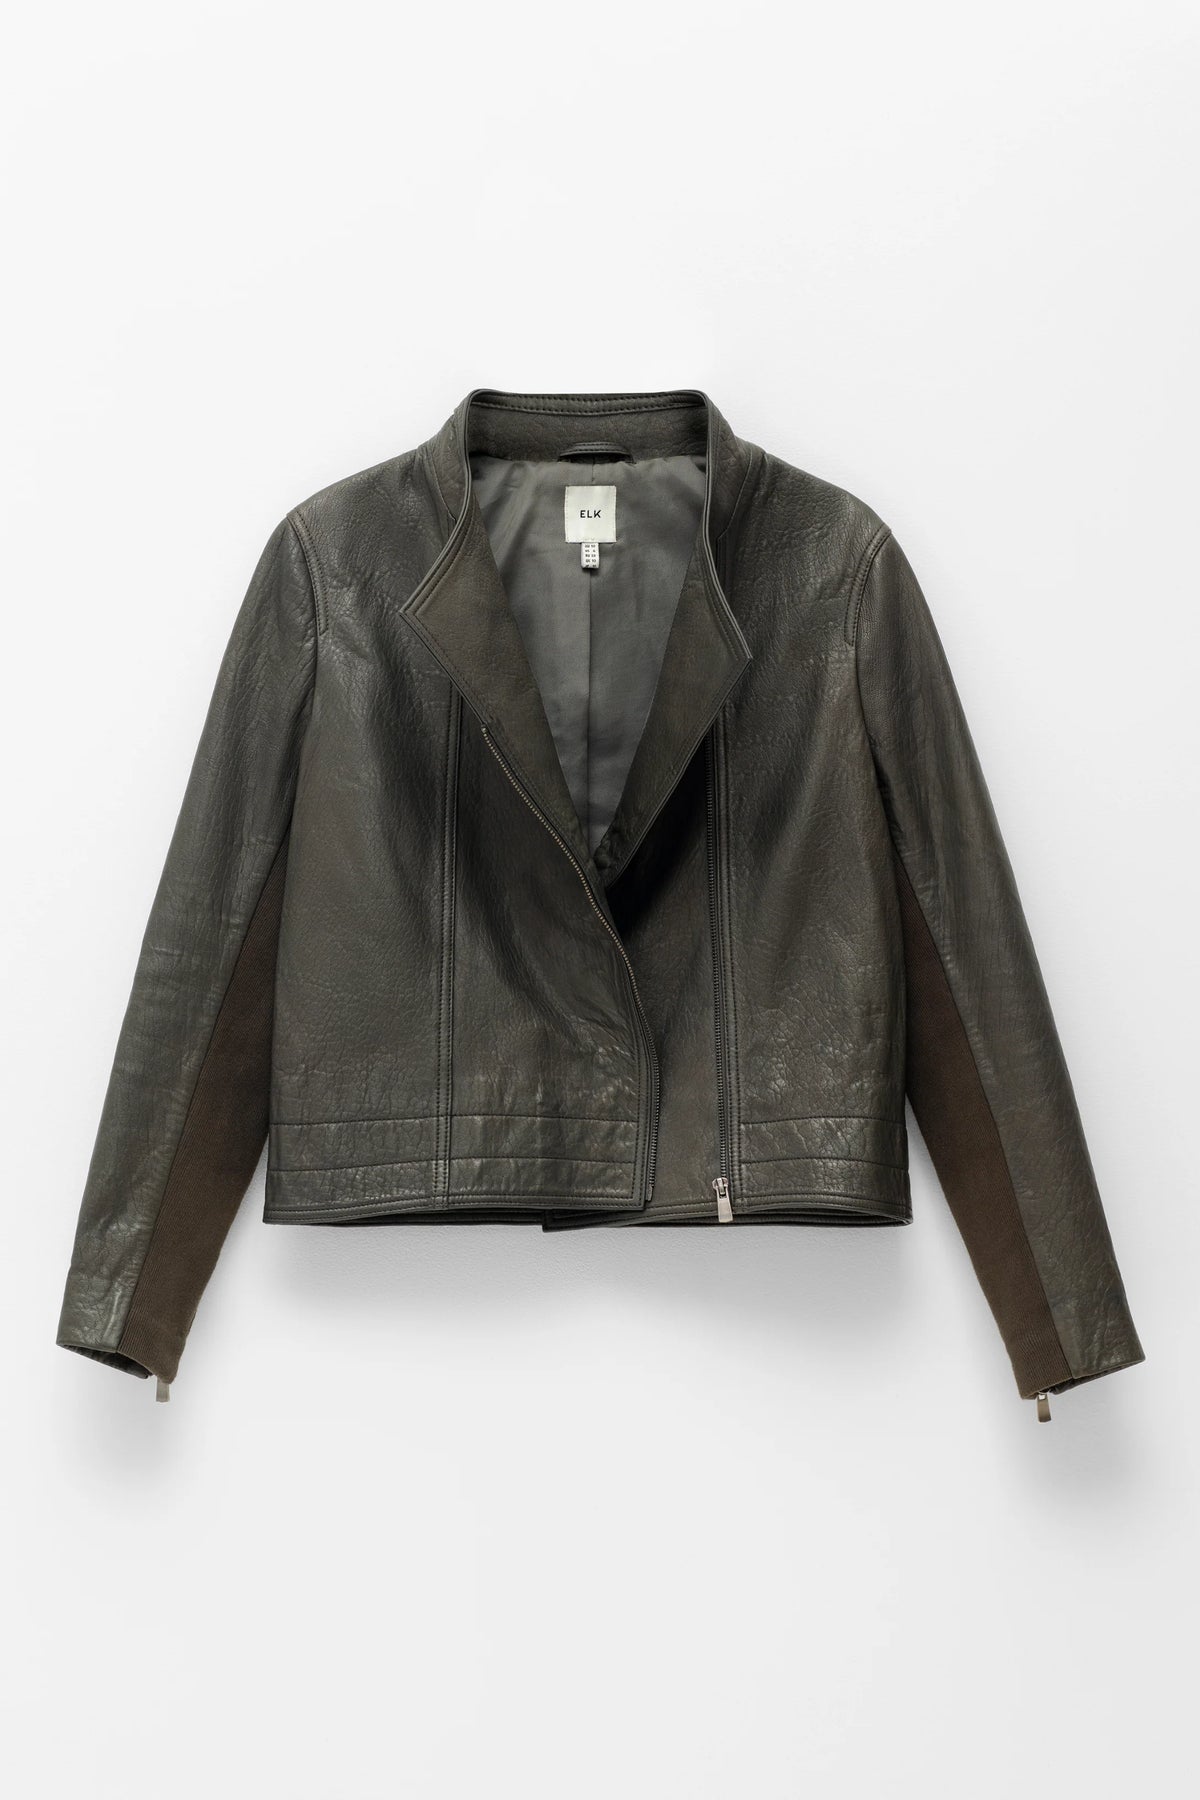 ELK | Lader Leather Jacket - Tarmac